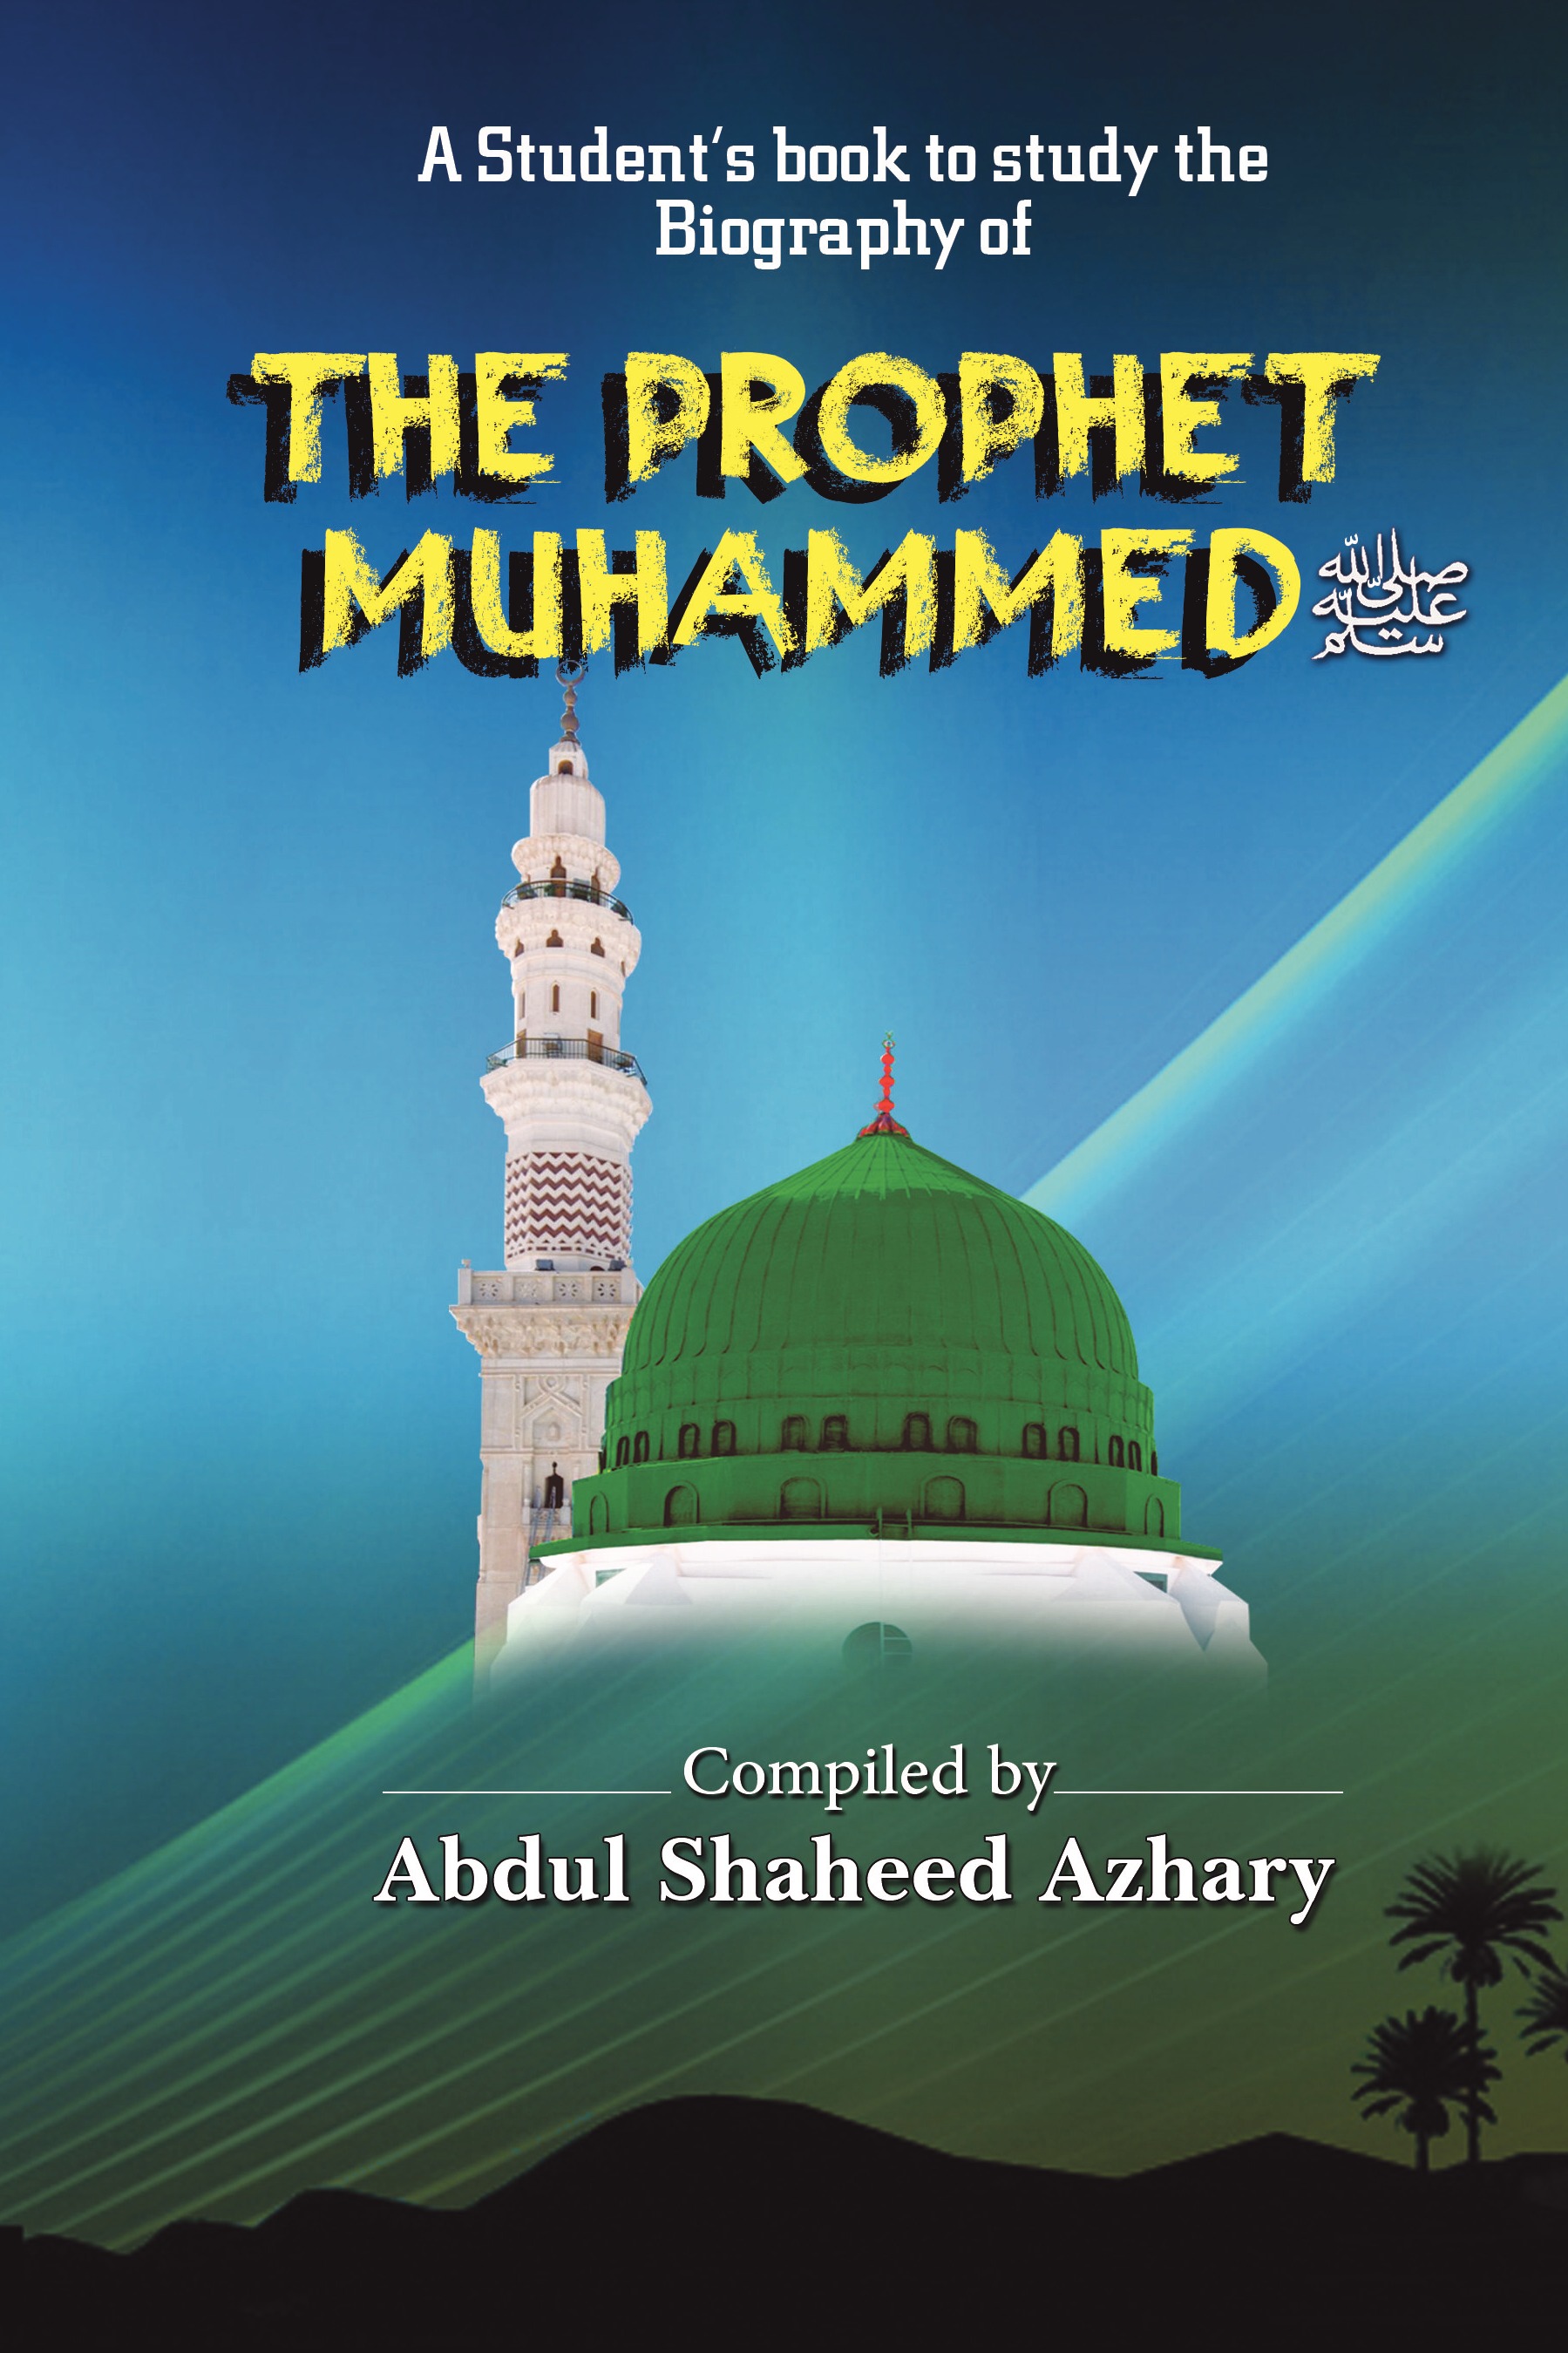 biography of prophet muhammad in malayalam